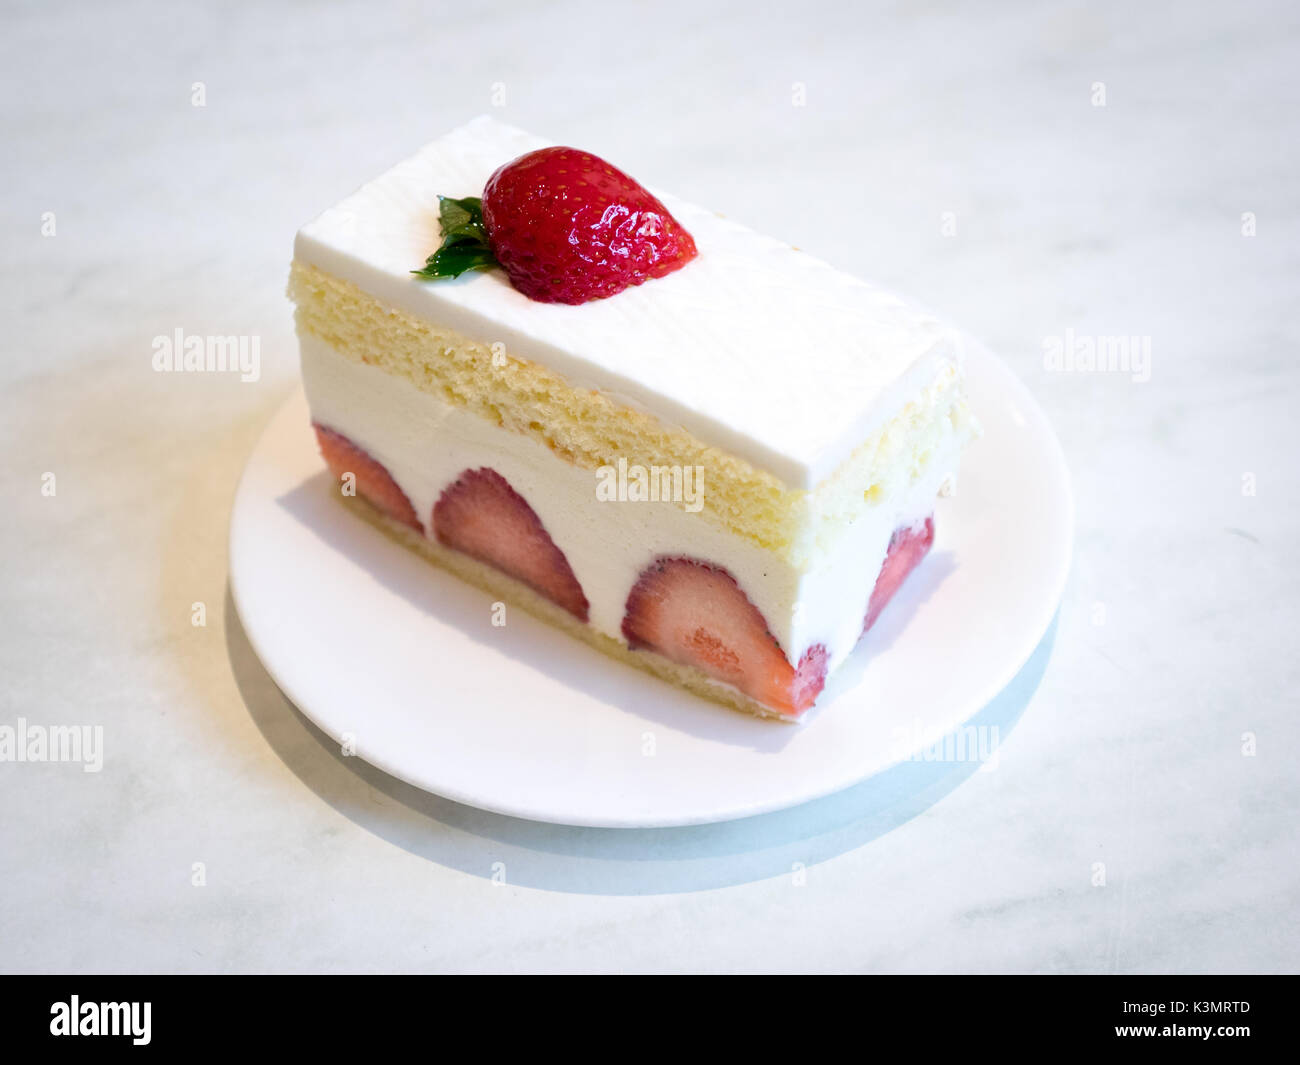 A slice of delicious strawberry shortcake, a popular dessert. Stock Photo